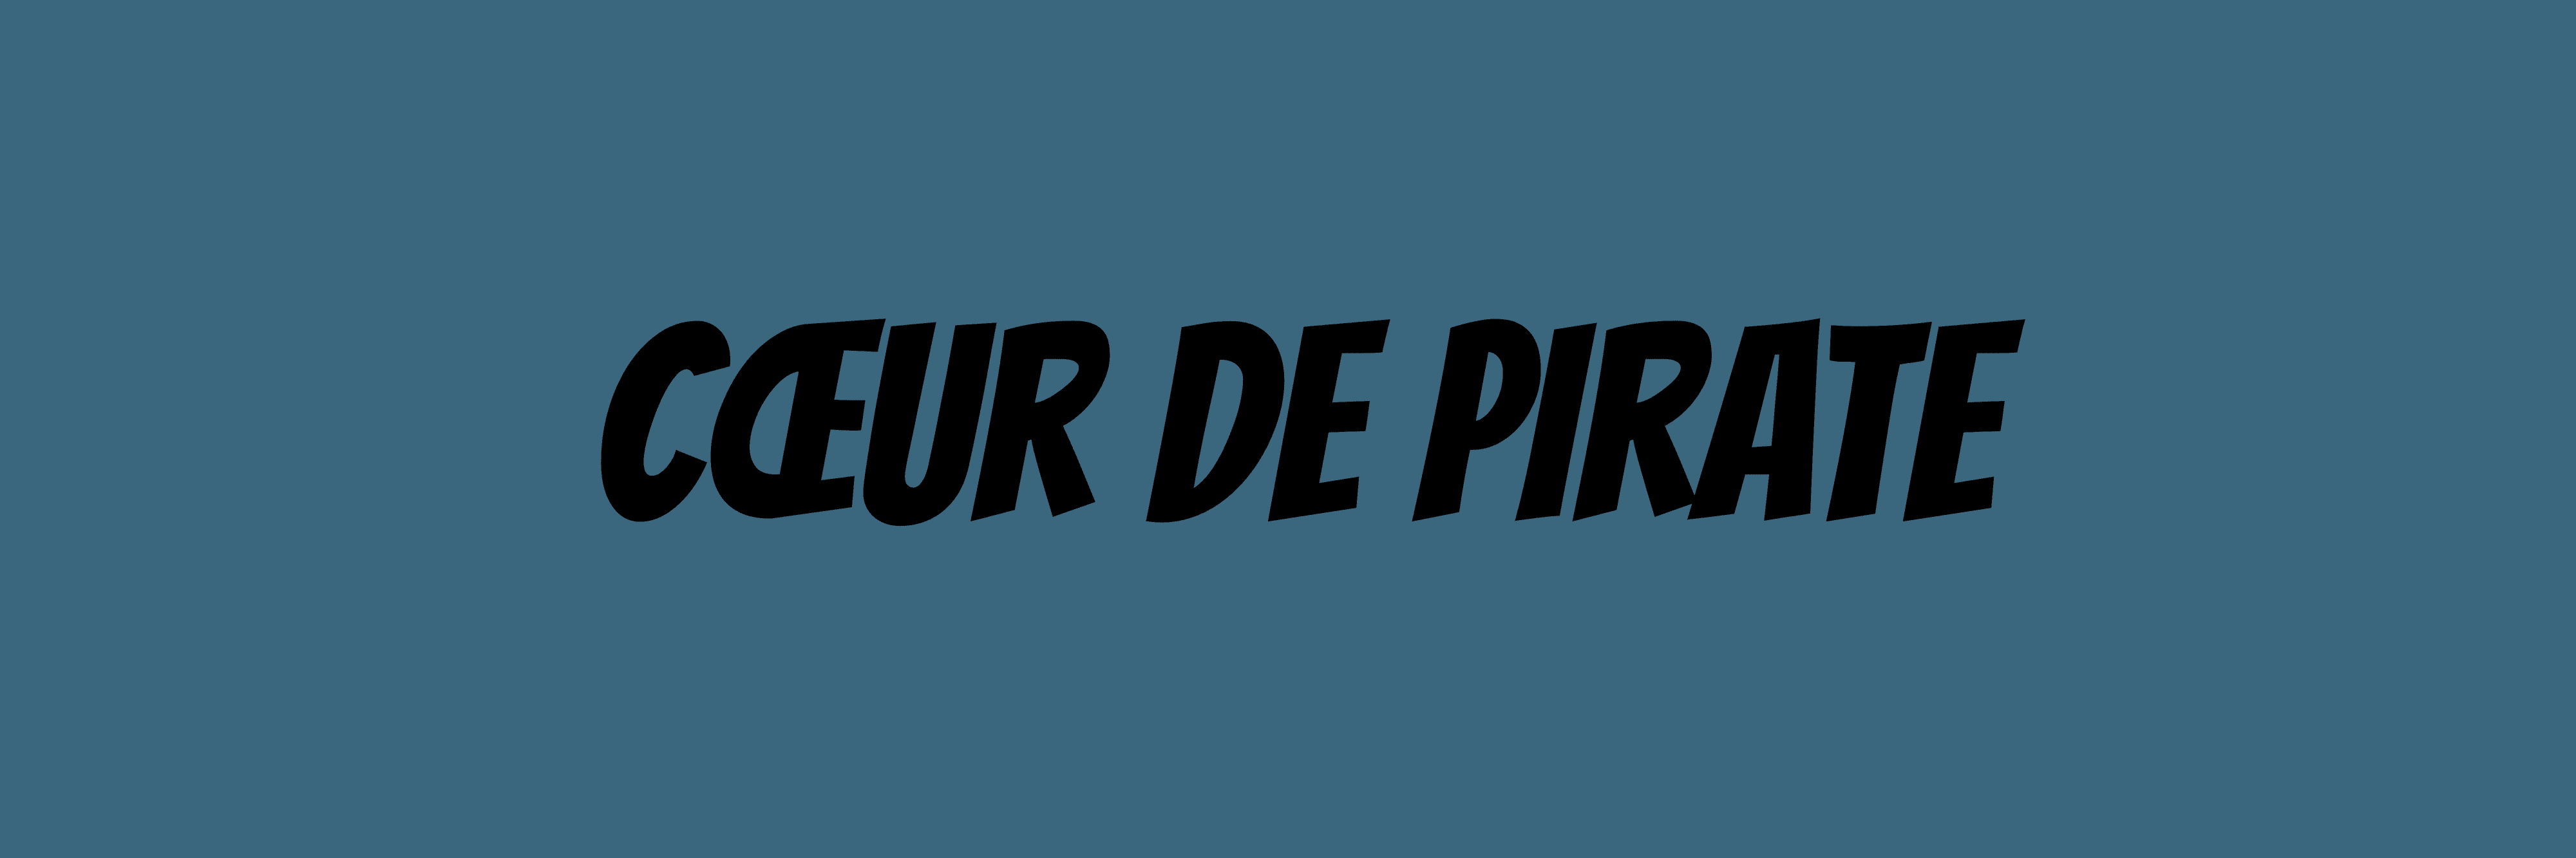 Coeur_de_pirate banner